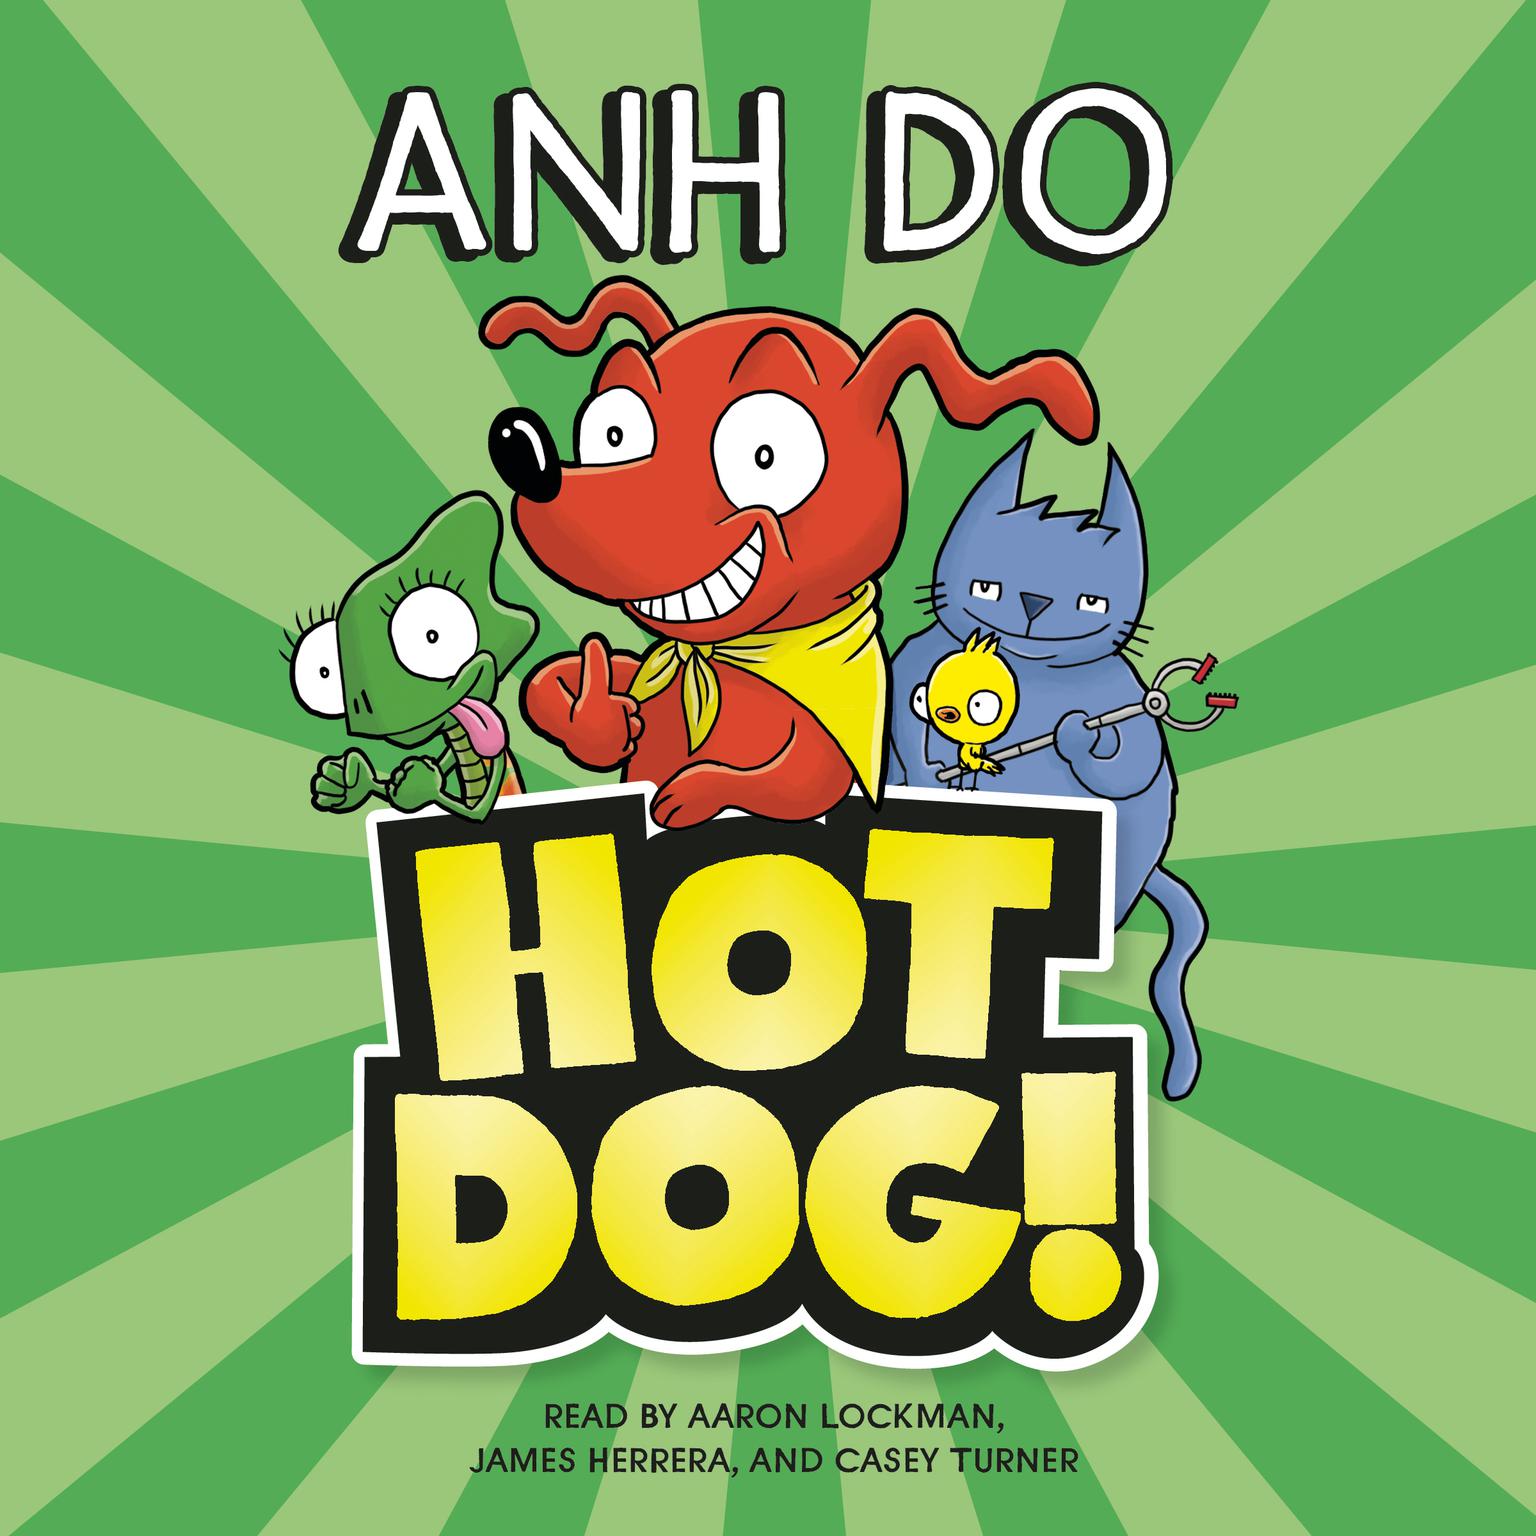 HotDog! Audiobook, by Anh Do